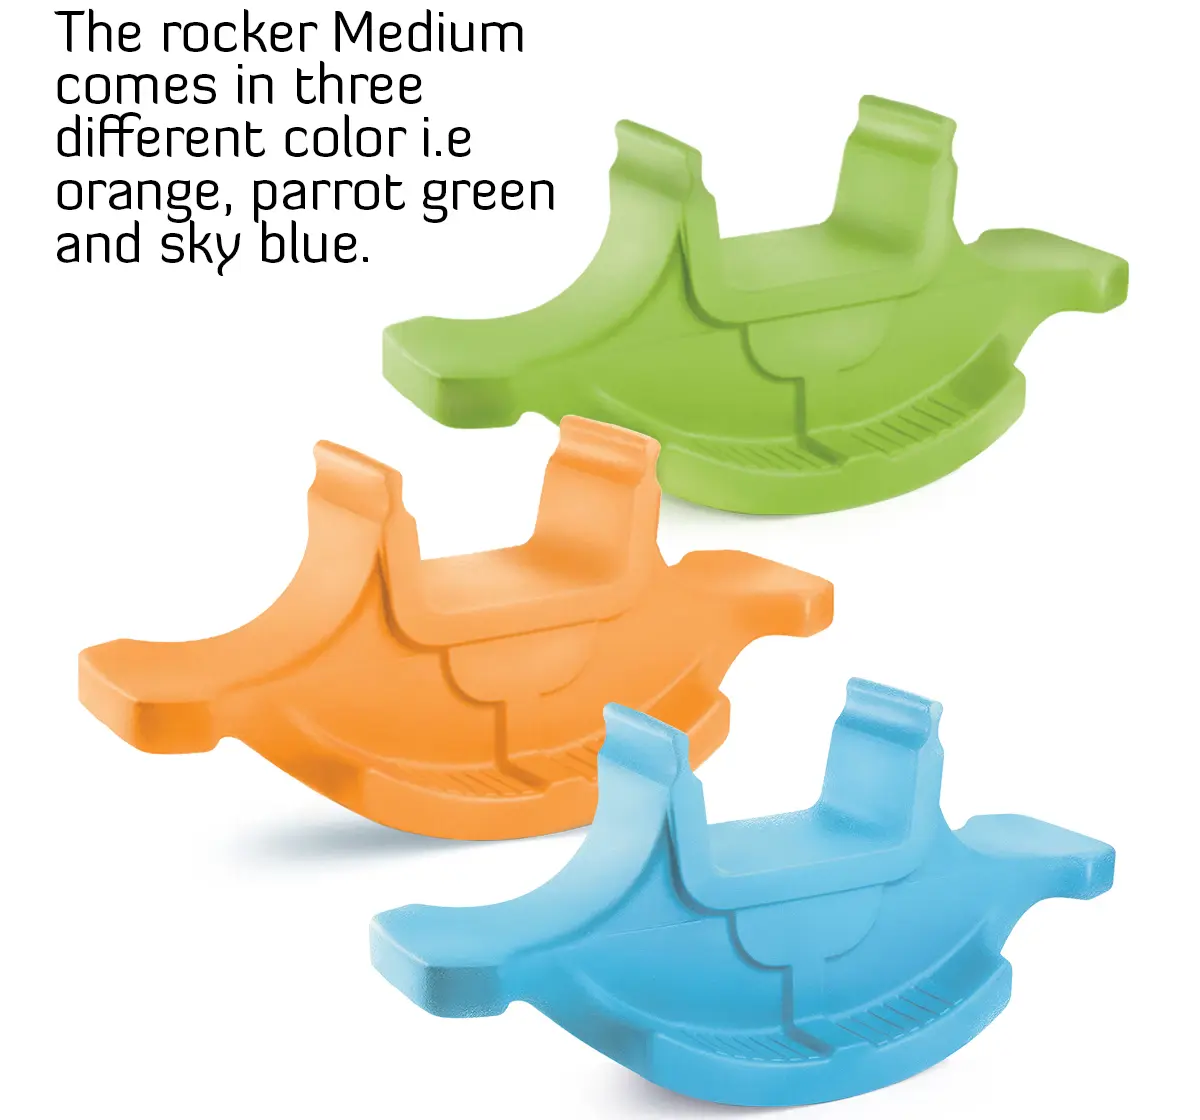 Ok Play Rocker Medium for Kids Boat Ride On Toy Blue 3Y+